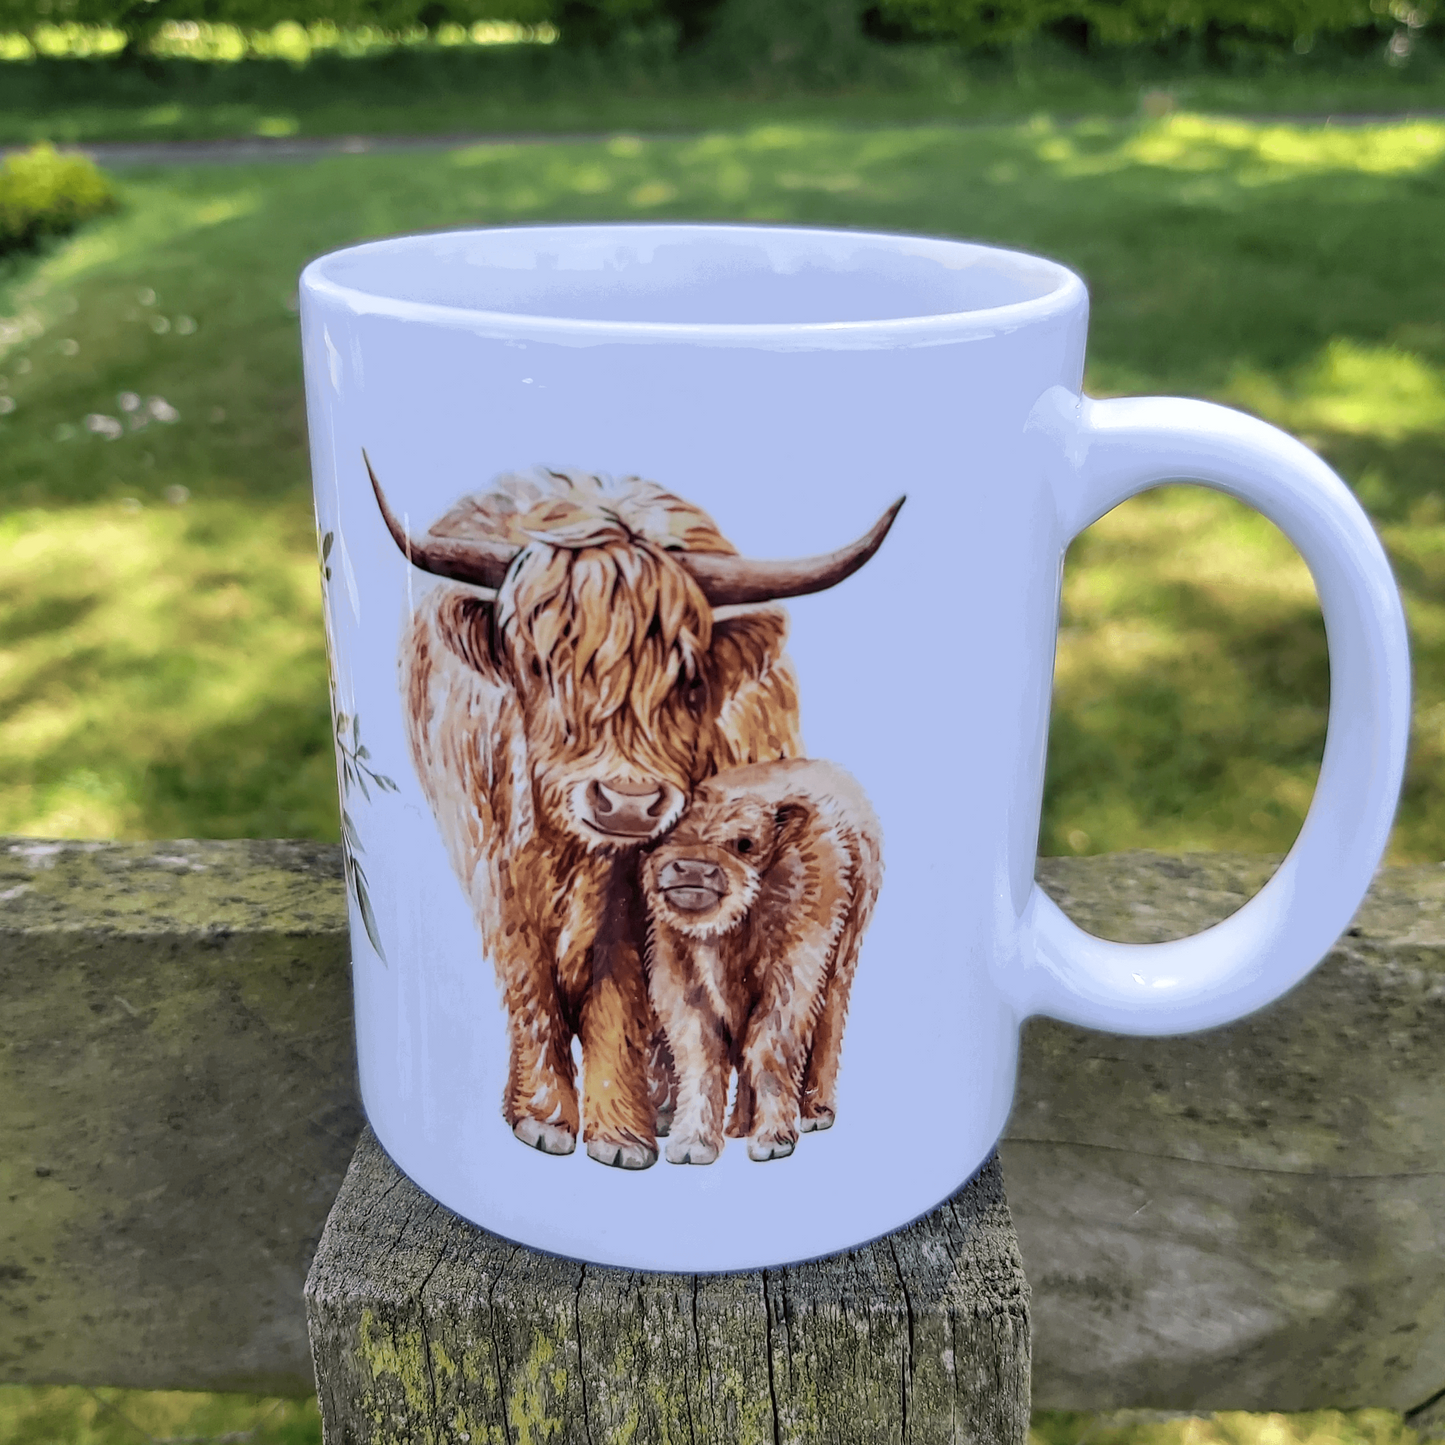 Highland cow and flower mug - Sew Tilley